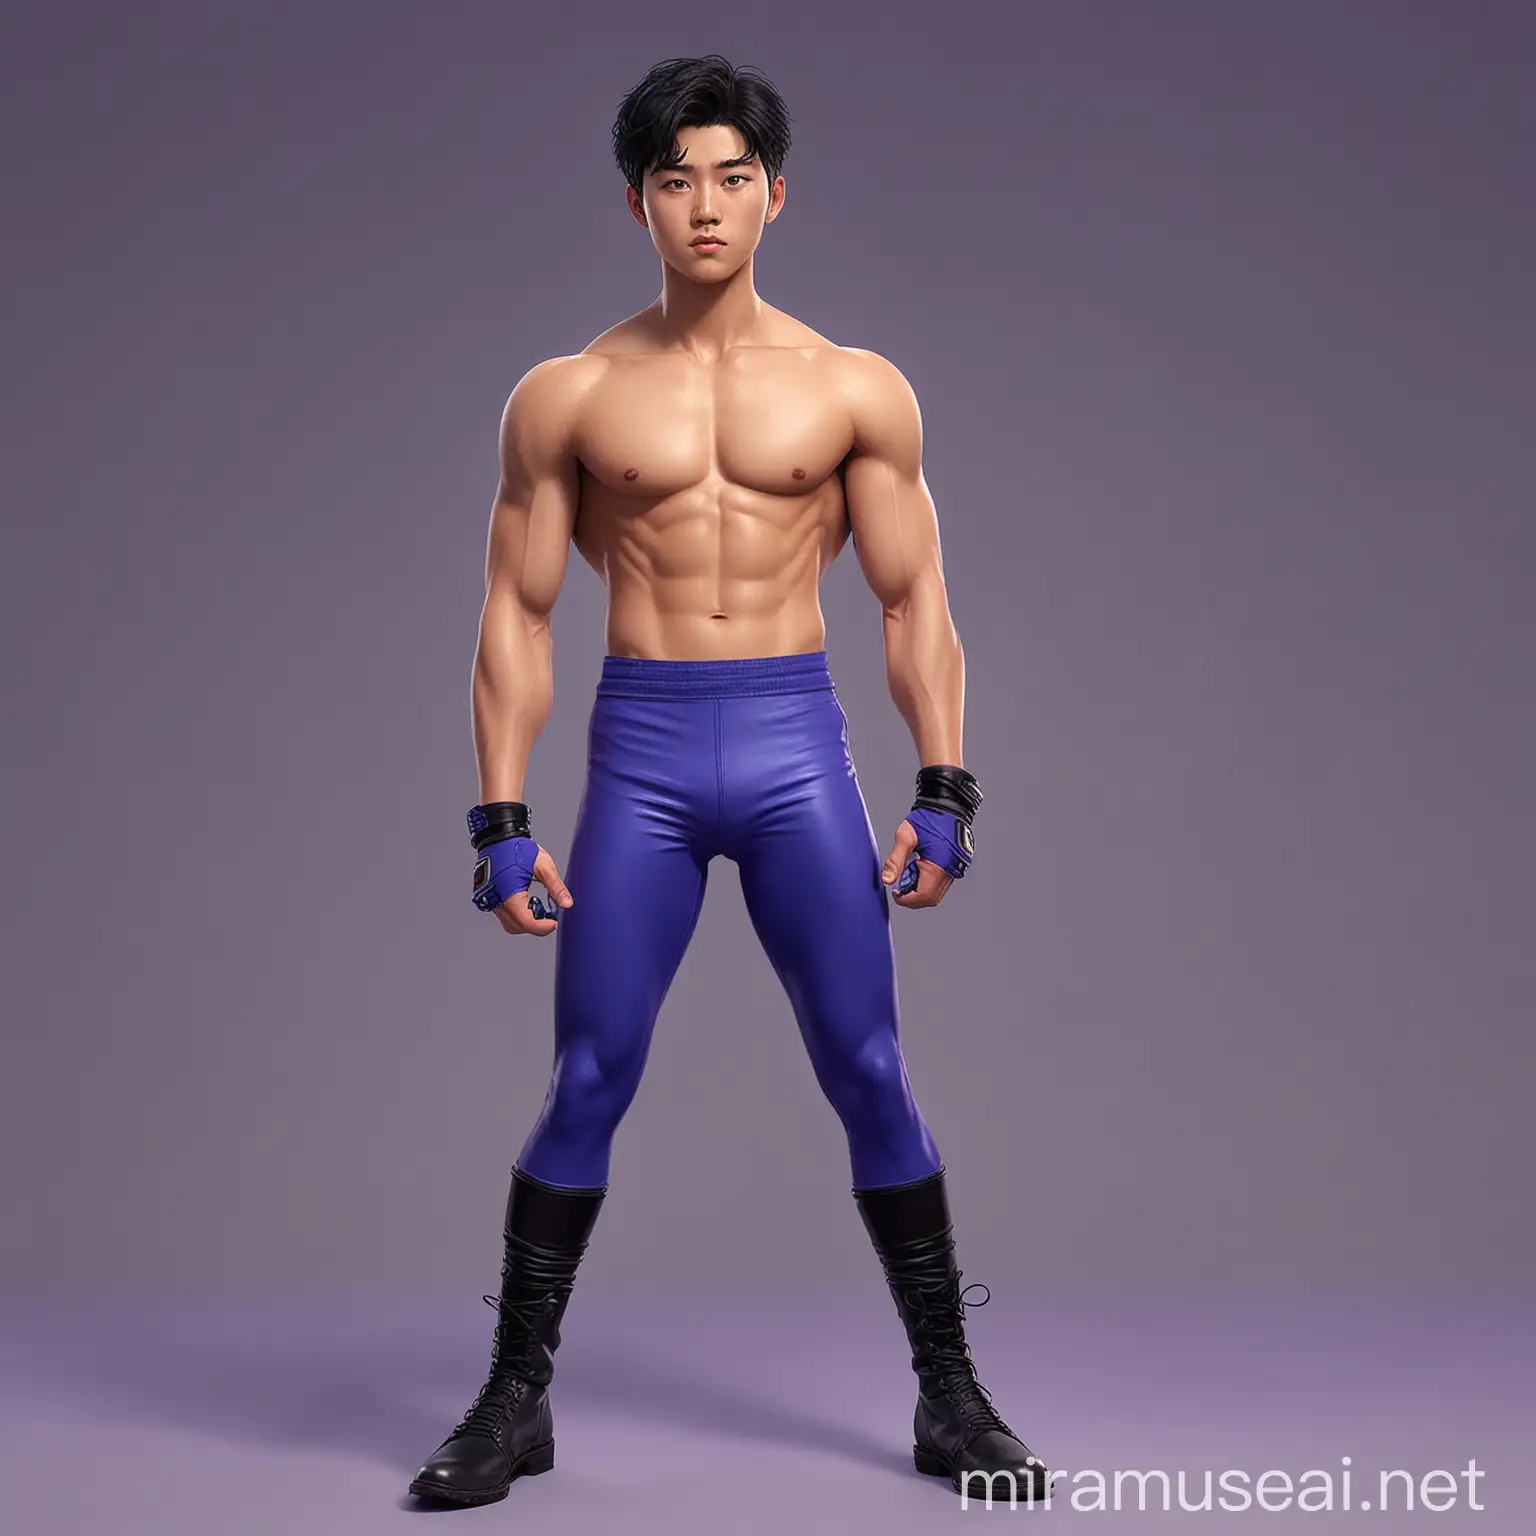 Fit Shirtless South Korean Fighter in Cobalt Blue Leggings Pixar Style